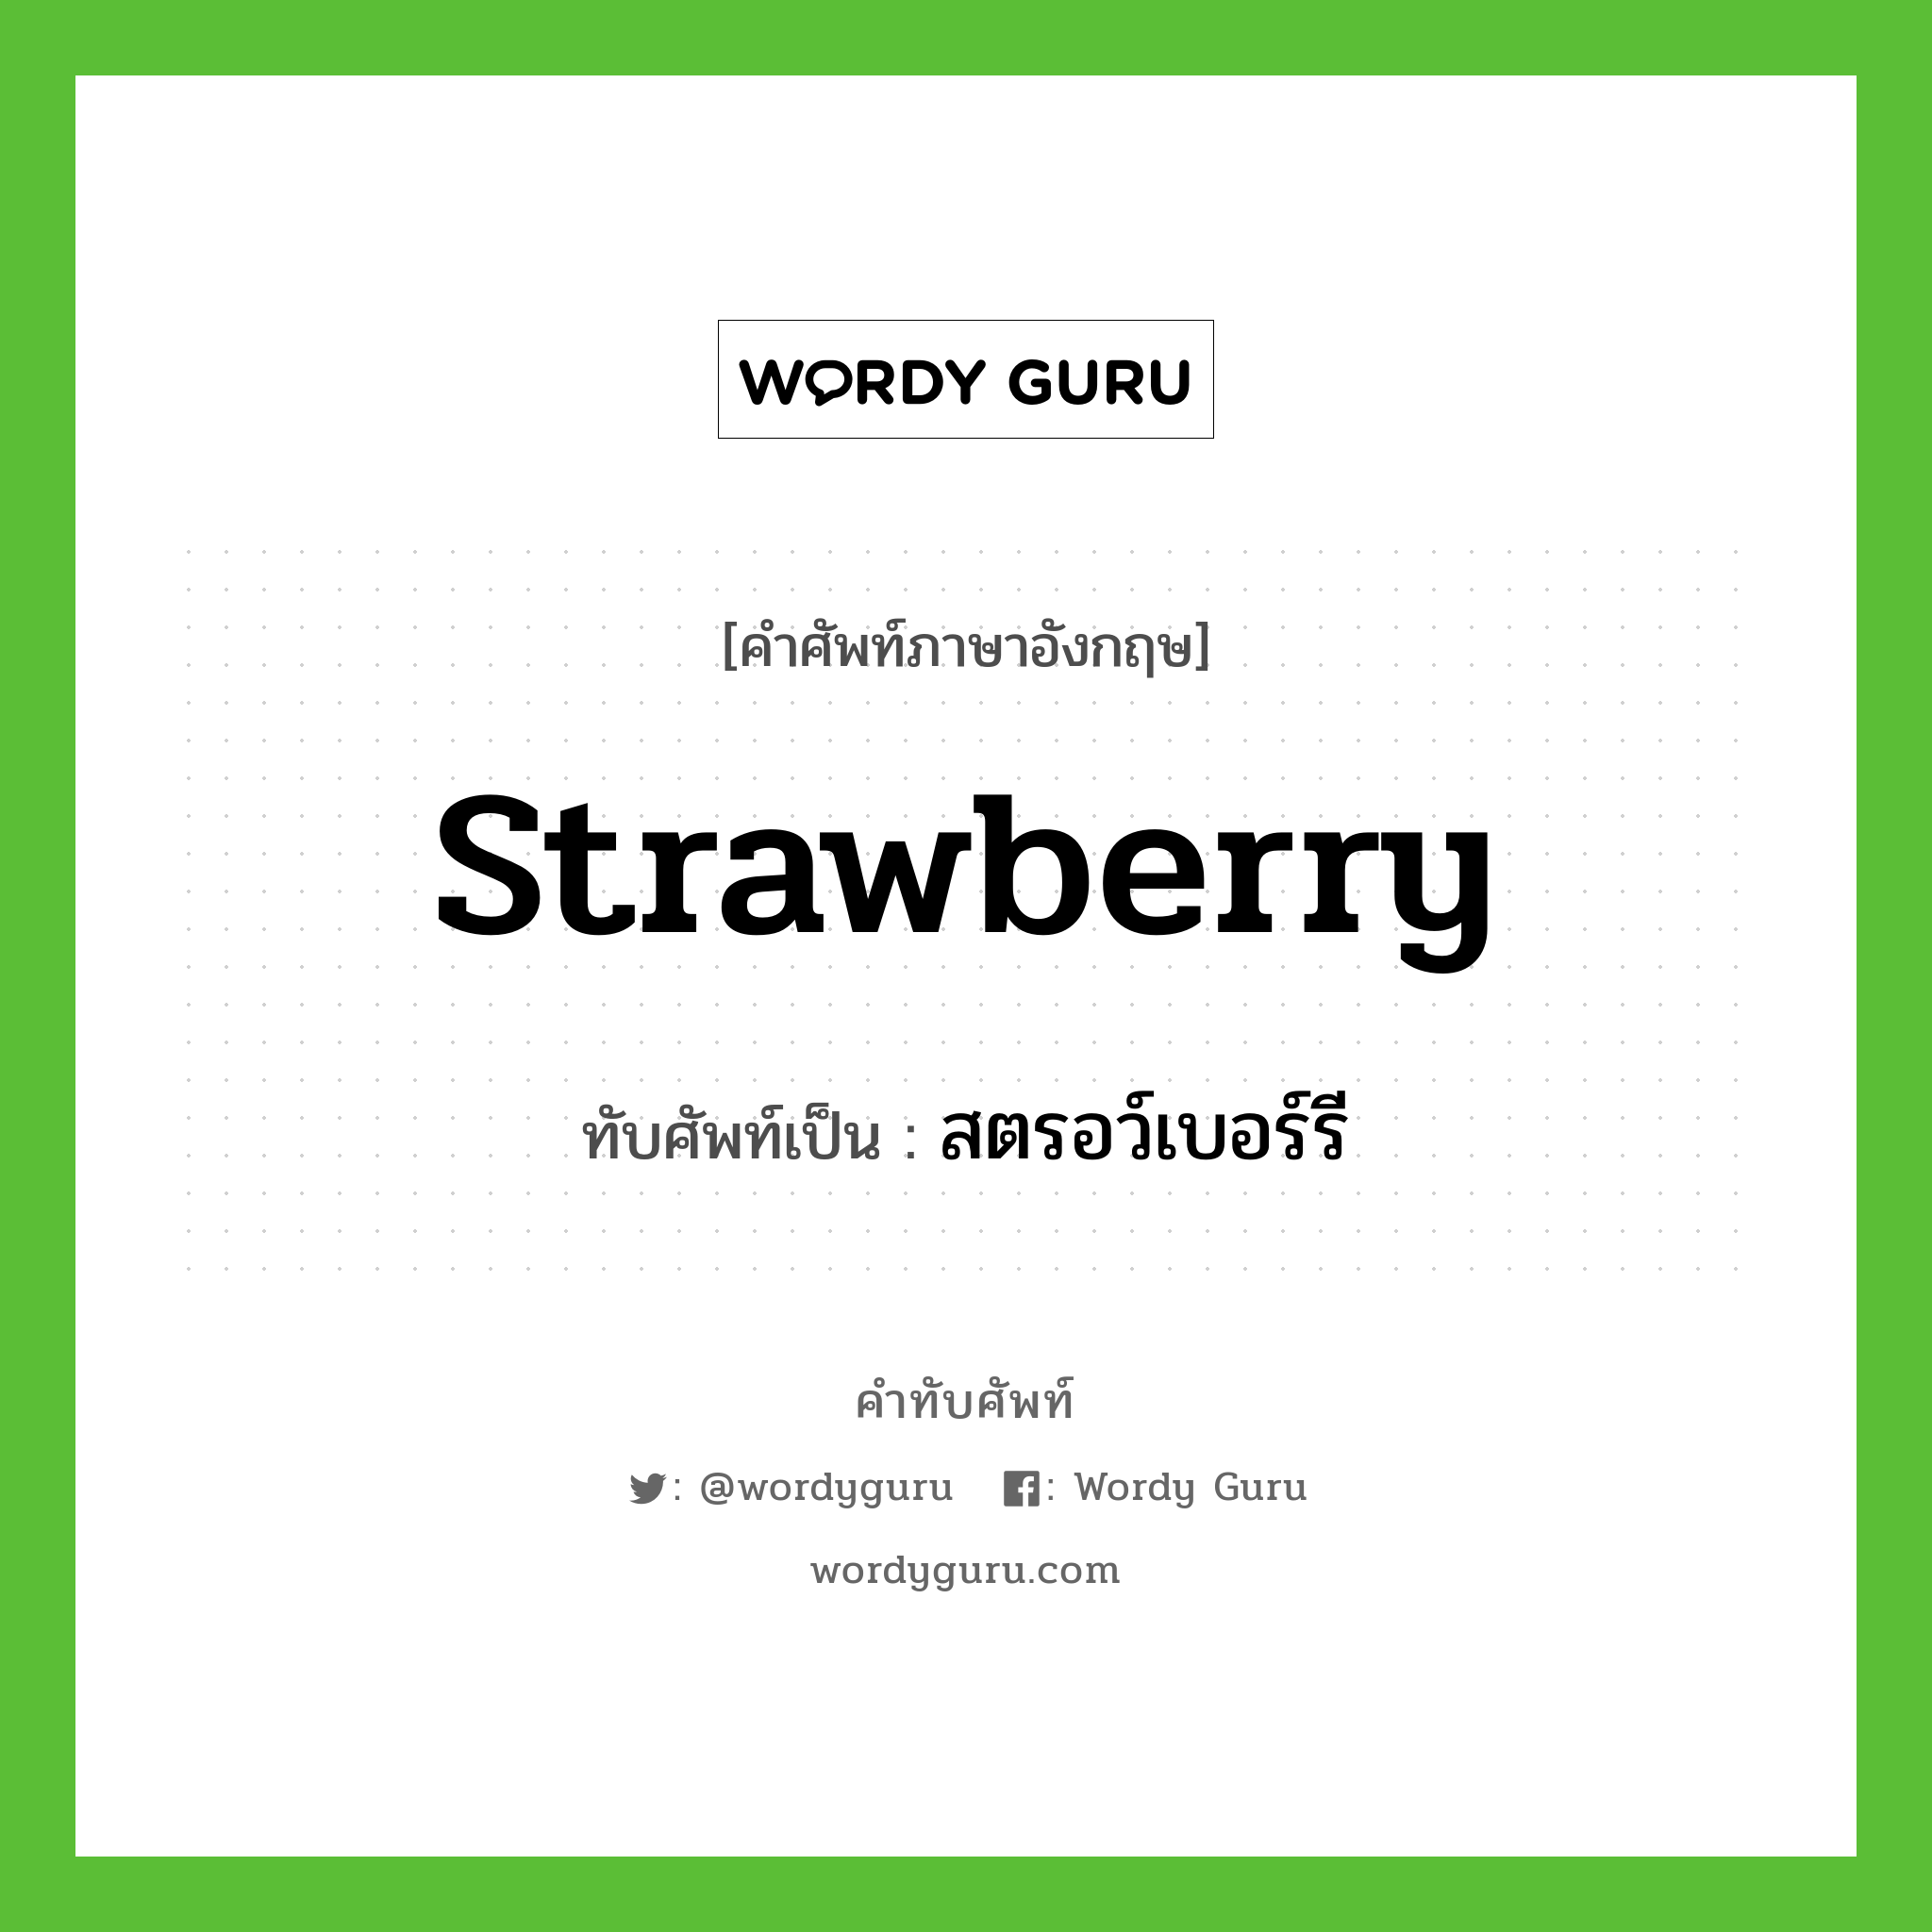 strawberry เขียนเป็นคำไทยว่าอะไร?, คำศัพท์ภาษาอังกฤษ strawberry ทับศัพท์เป็น สตรอว์เบอร์รี